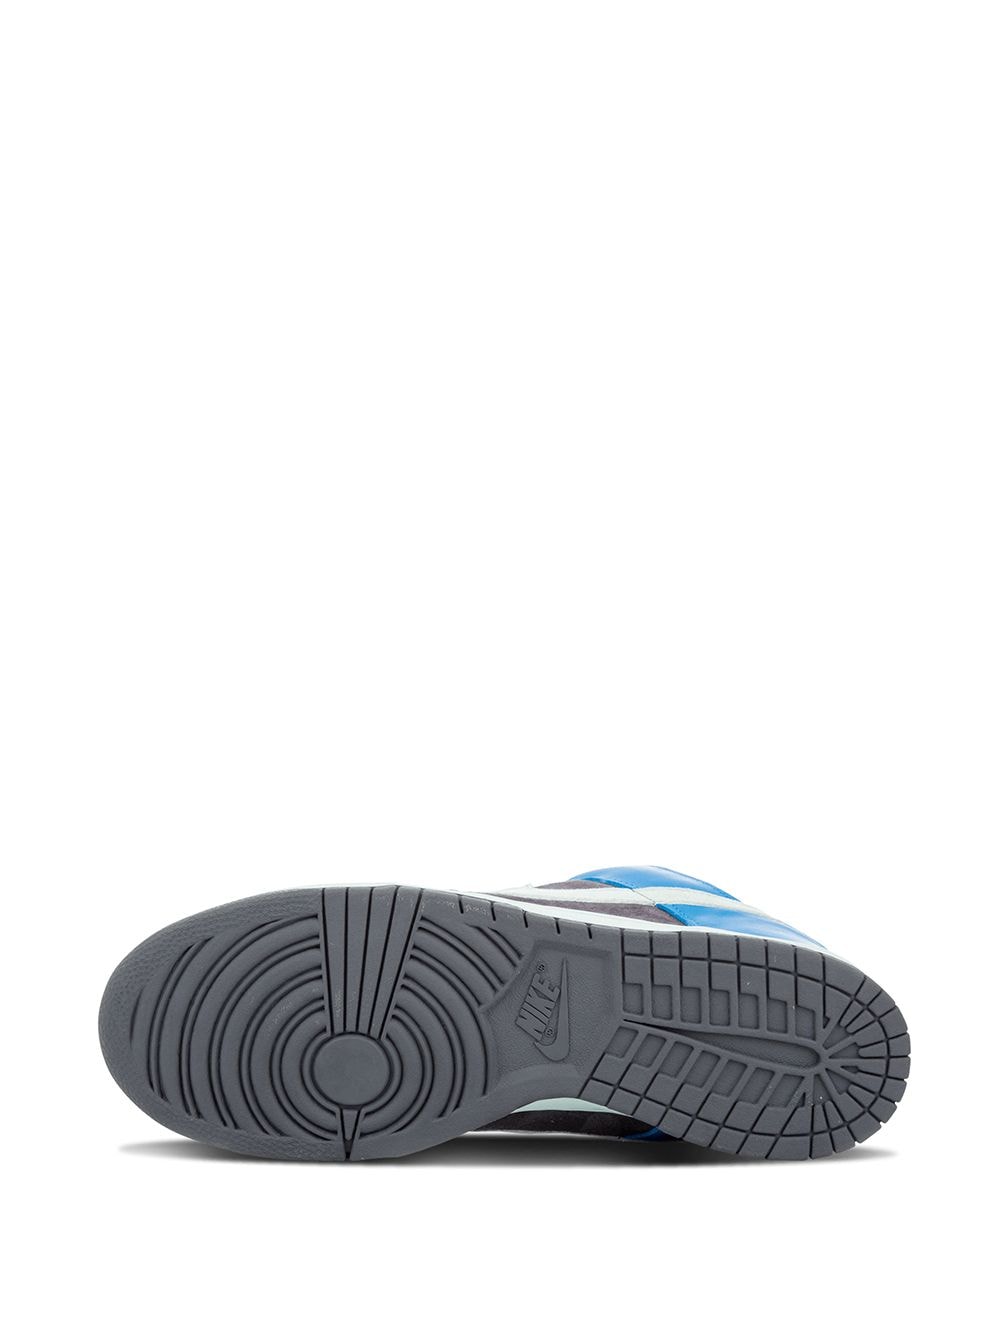 Nike Dunk Low Pro SB "Aqua Chalk" sneakers